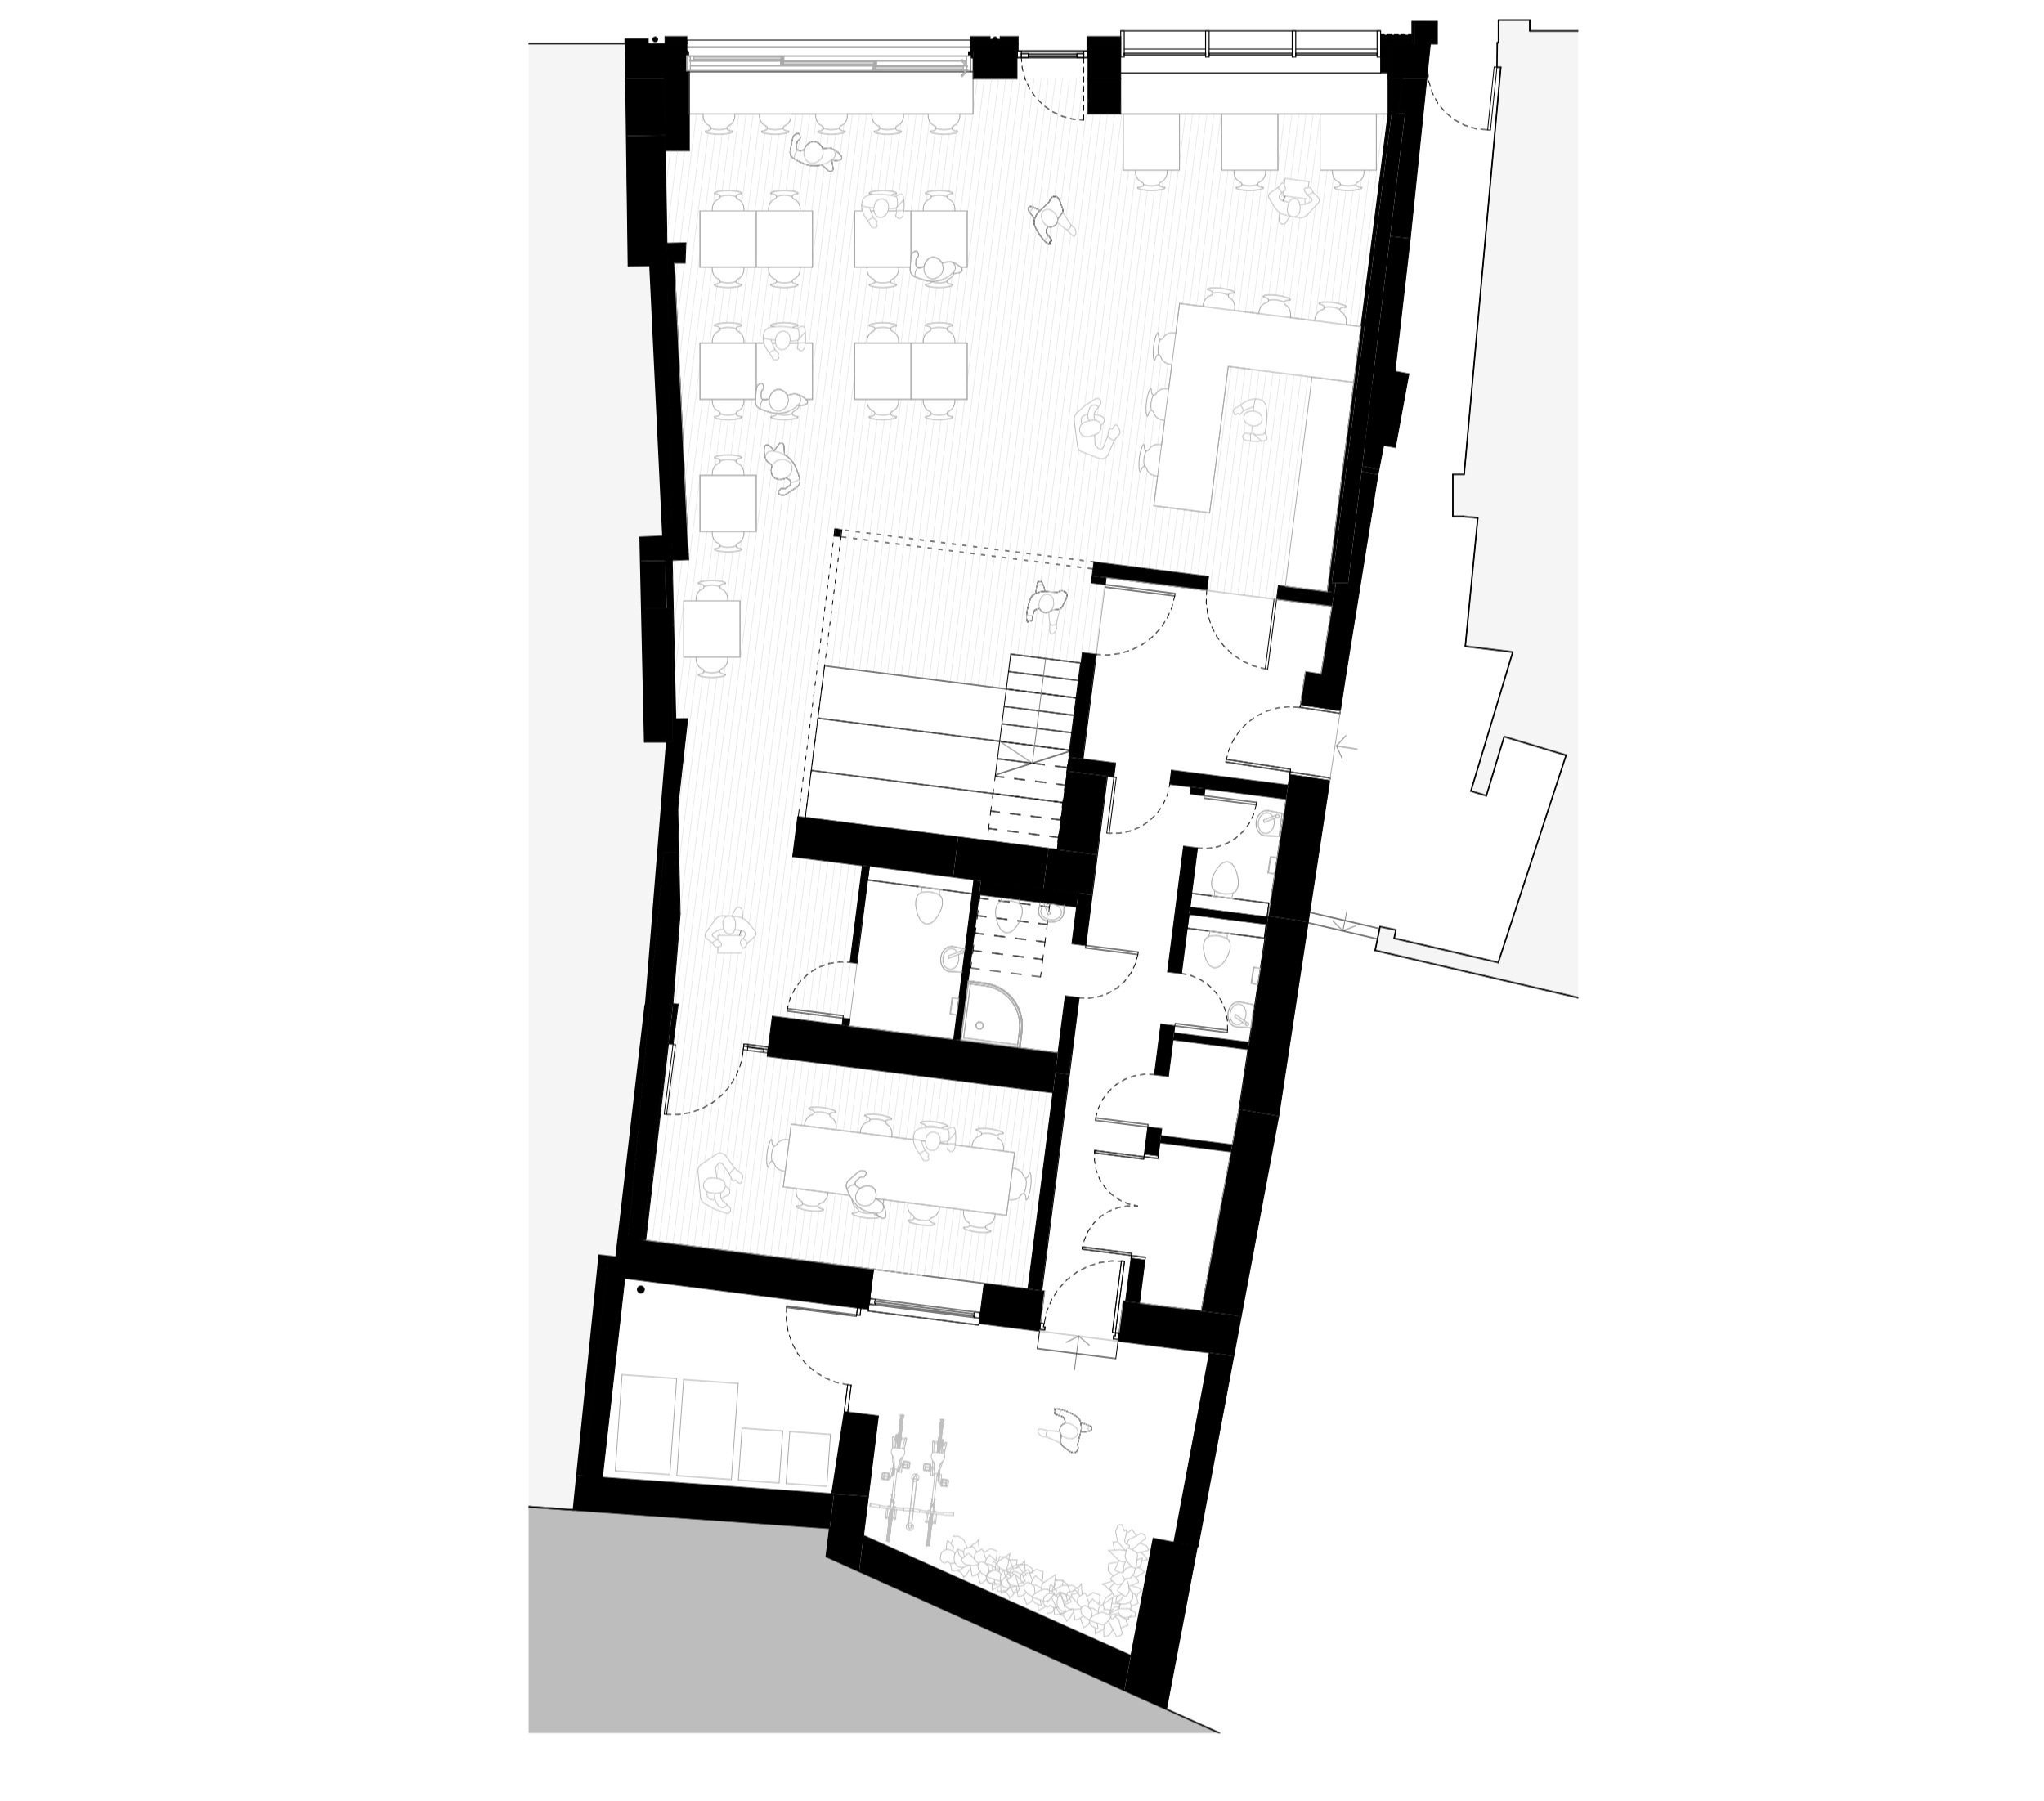 Proposed ground floor